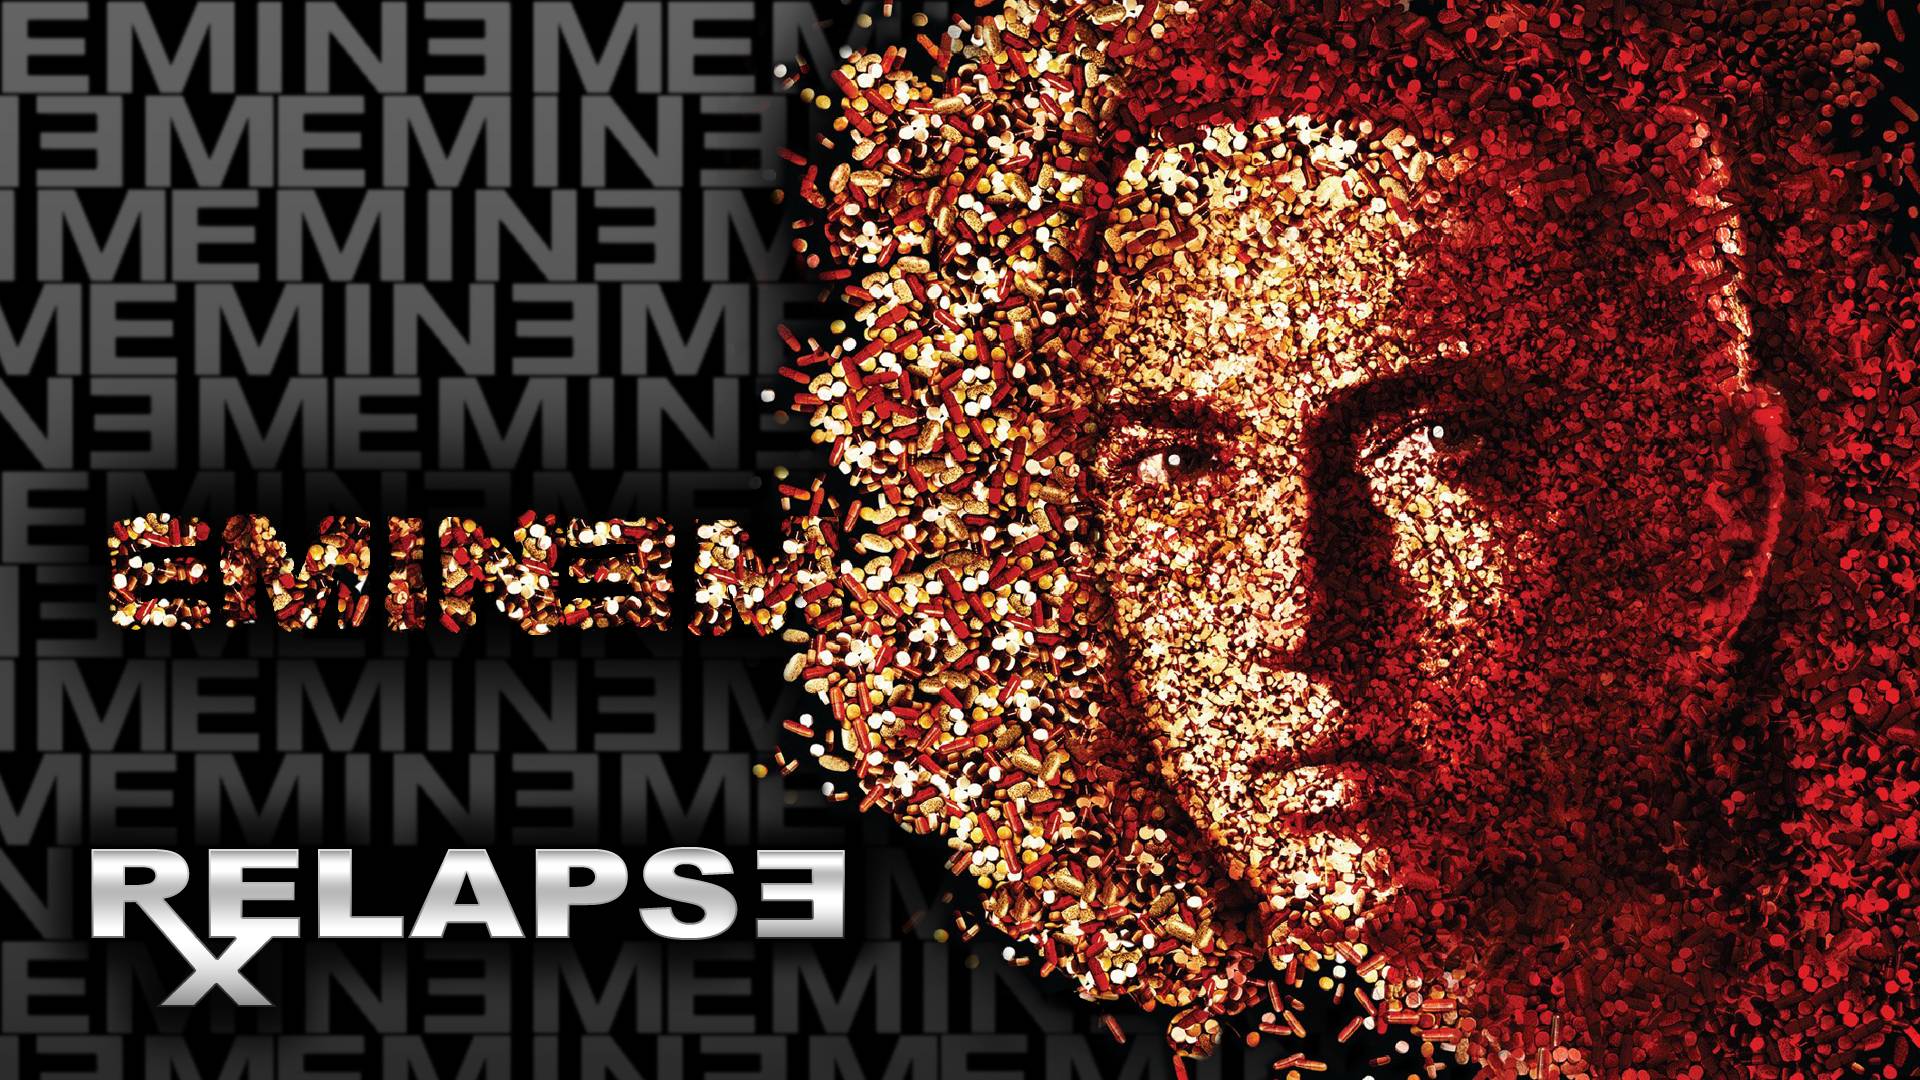 Download the Eminem Relapse Wallpaper, Eminem Relapse iPhone